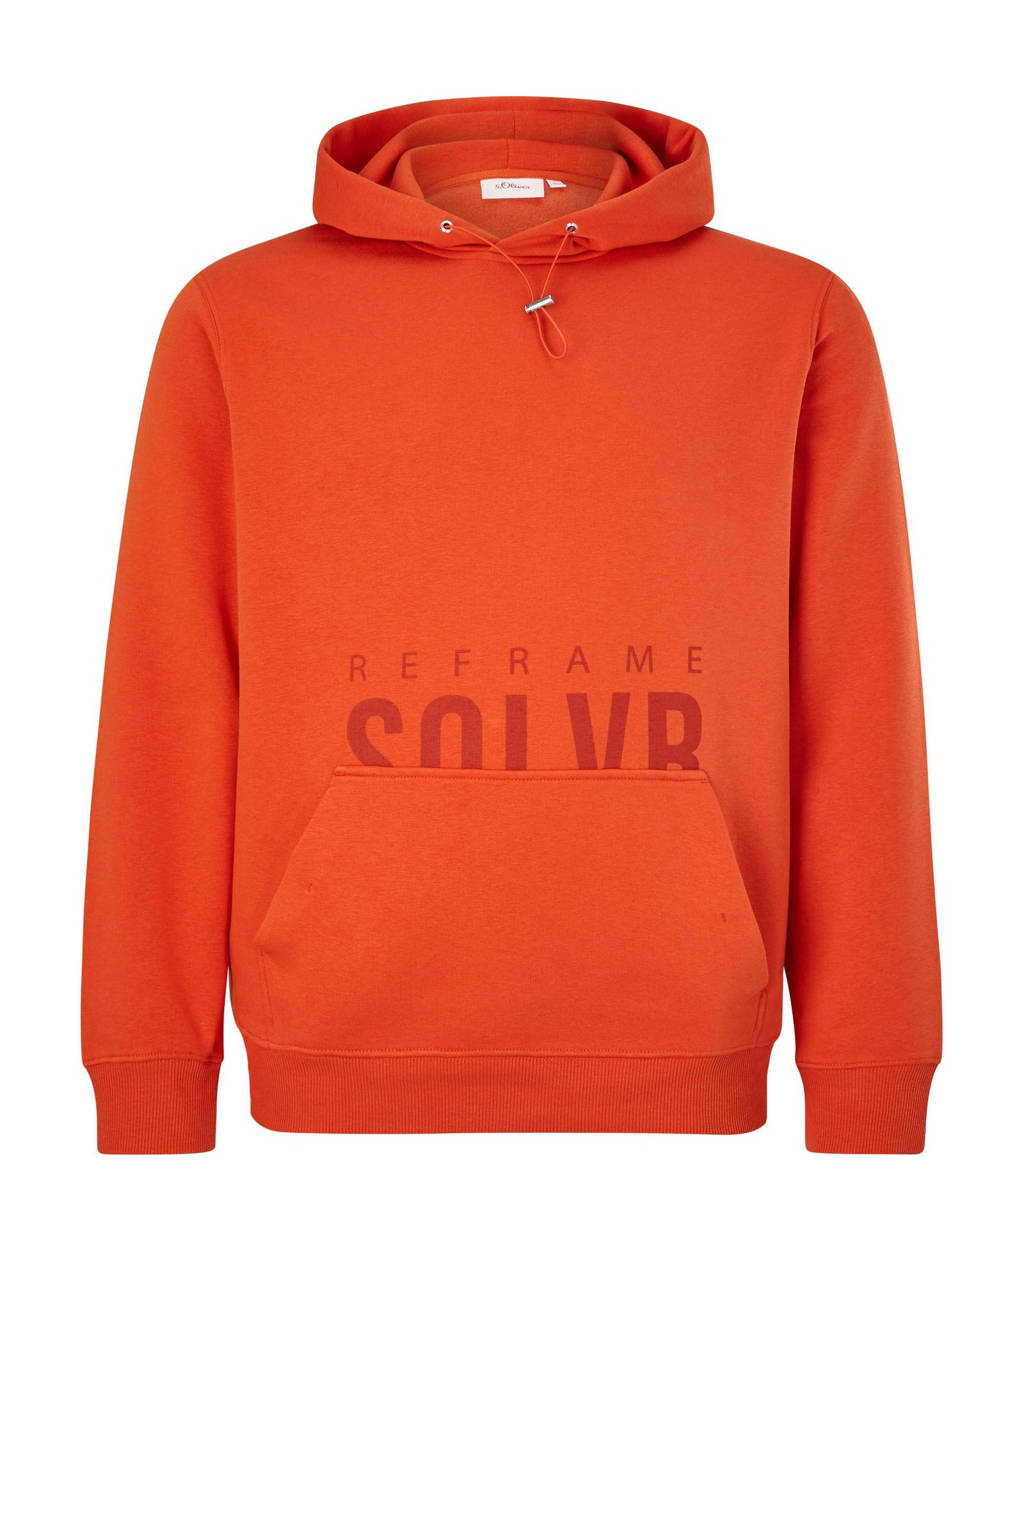 s.Oliver Big Size hoodie Plus Size met tekst oranje, Oranje